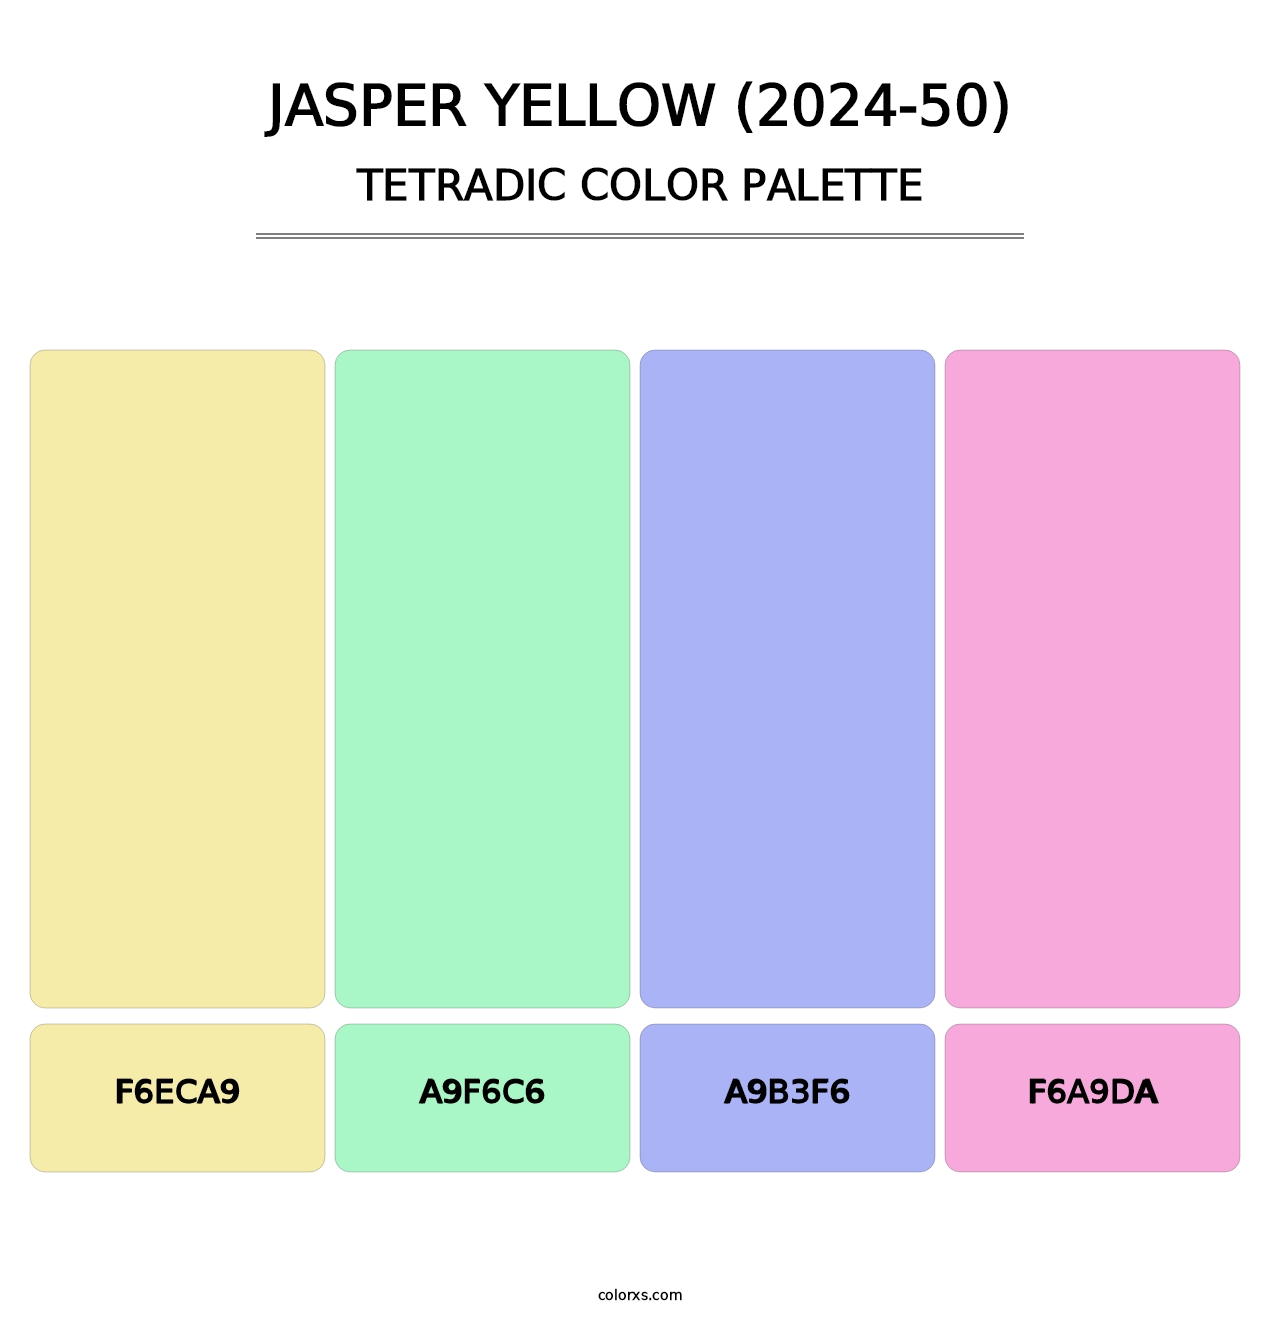 Jasper Yellow (2024-50) - Tetradic Color Palette